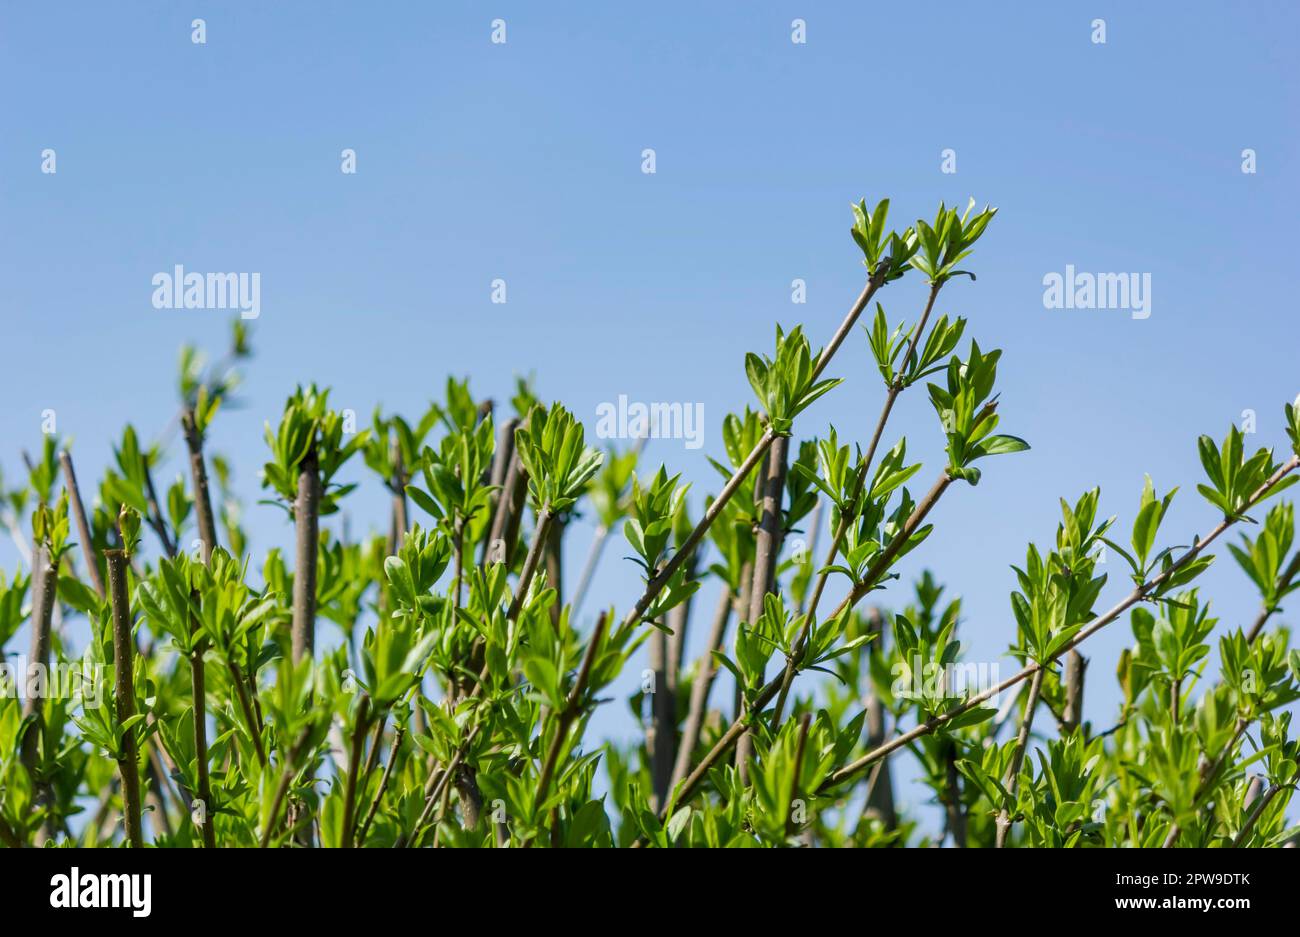 Light green shiny leaves of marsh azalea, swamp honeysuckle, Latin name Rhododendron Viscosum, against a blue sky. Copy space Stock Photo